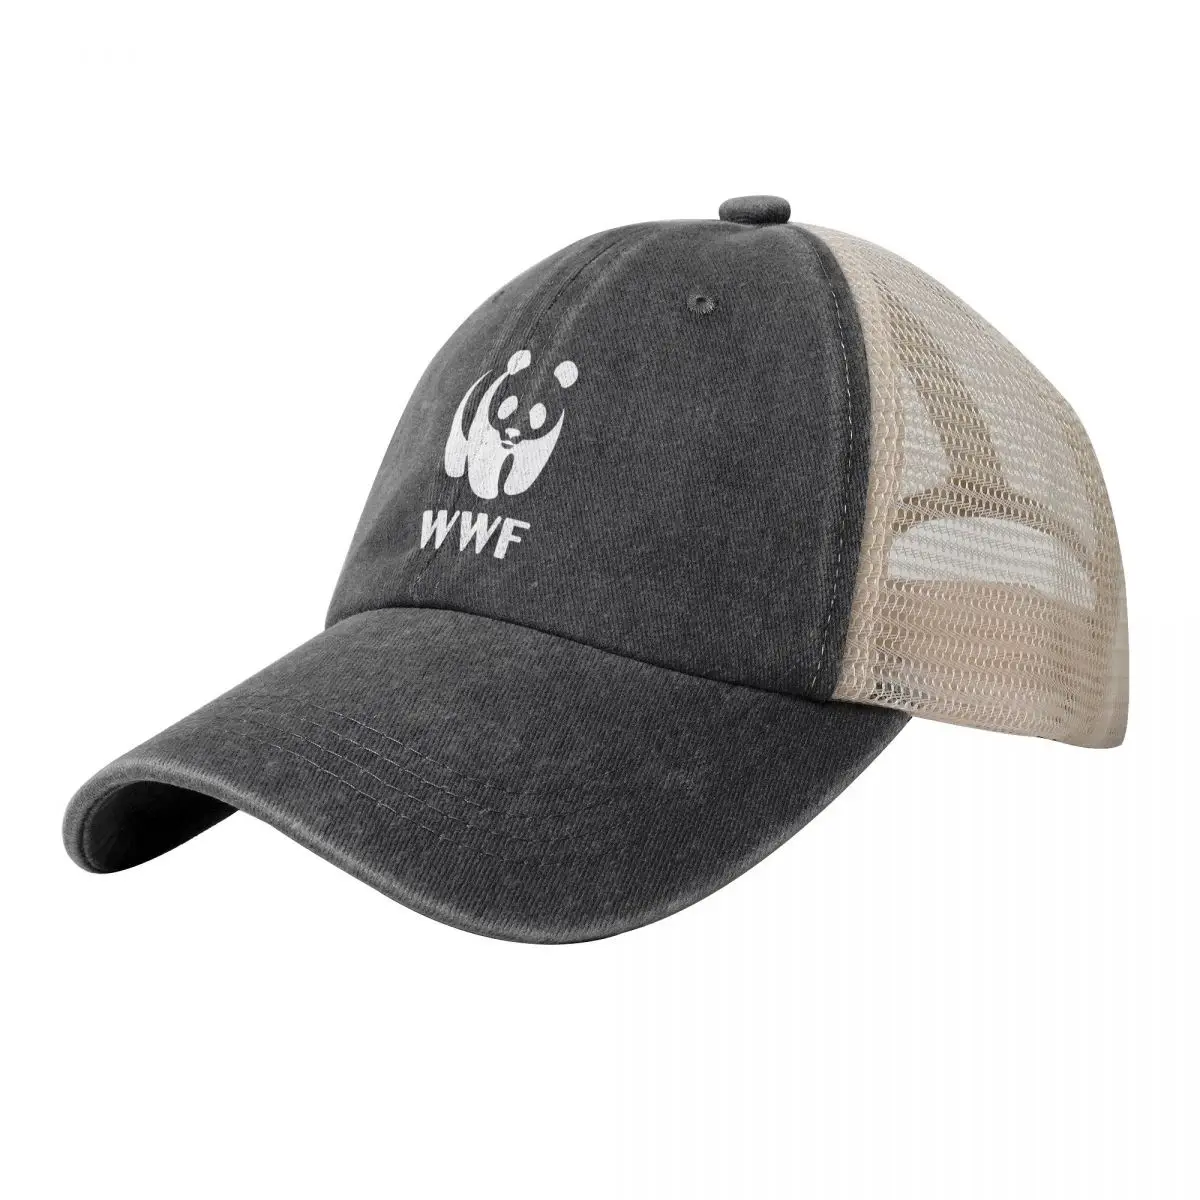 

World Wide Fund For Nature WWF Mesh Baseball Cap Baseball Net Caps Spring Summer Sunscreen Cowboy Outdoor Casual Hats